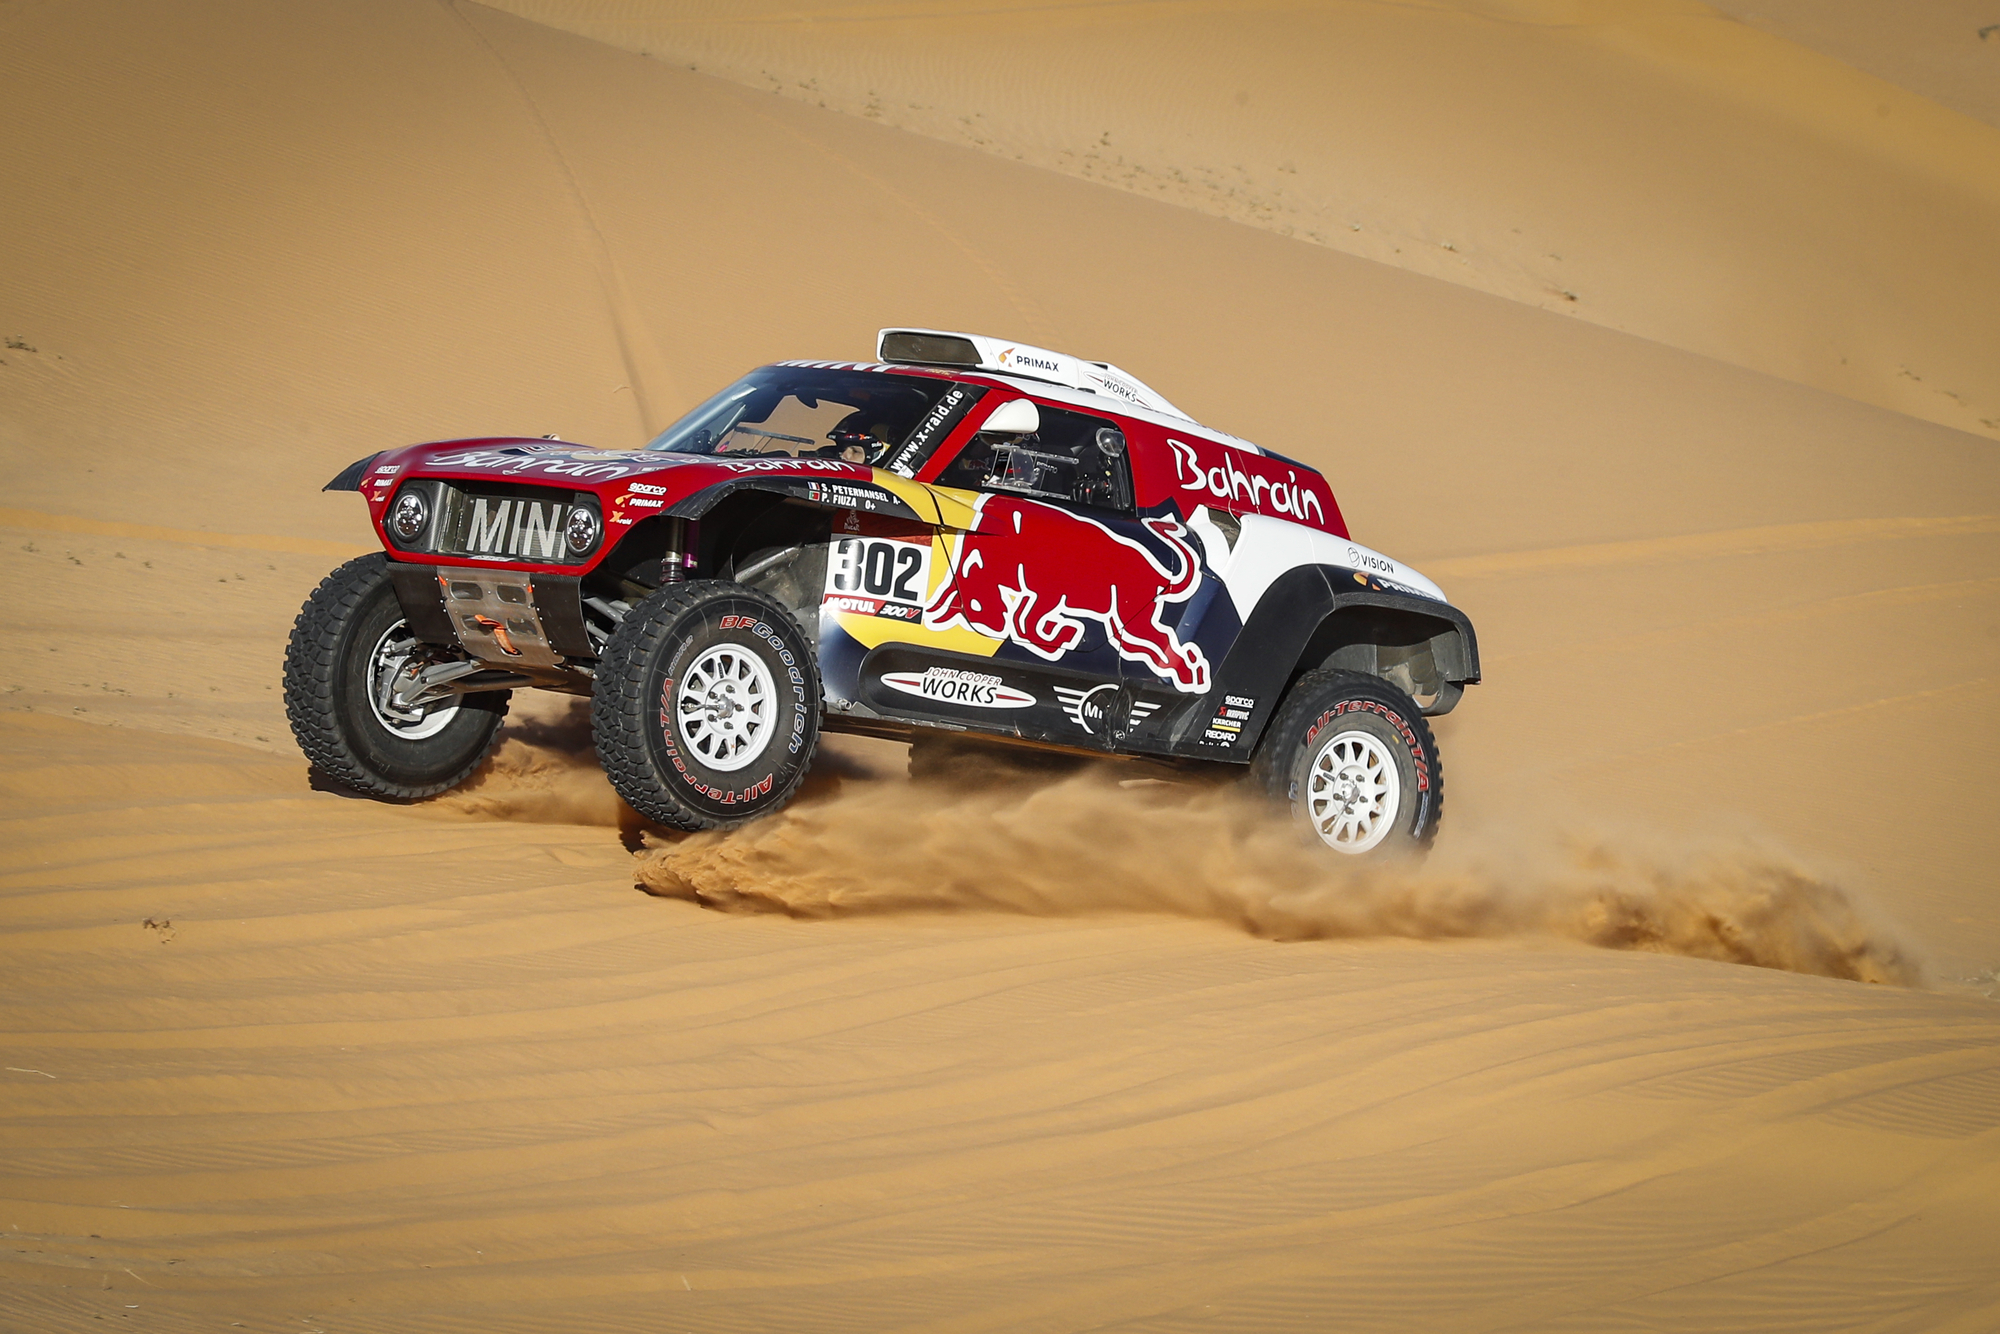 Rallye Dakar 2023 startuje. Držte si klobouky, bude to jízda! foto č.1